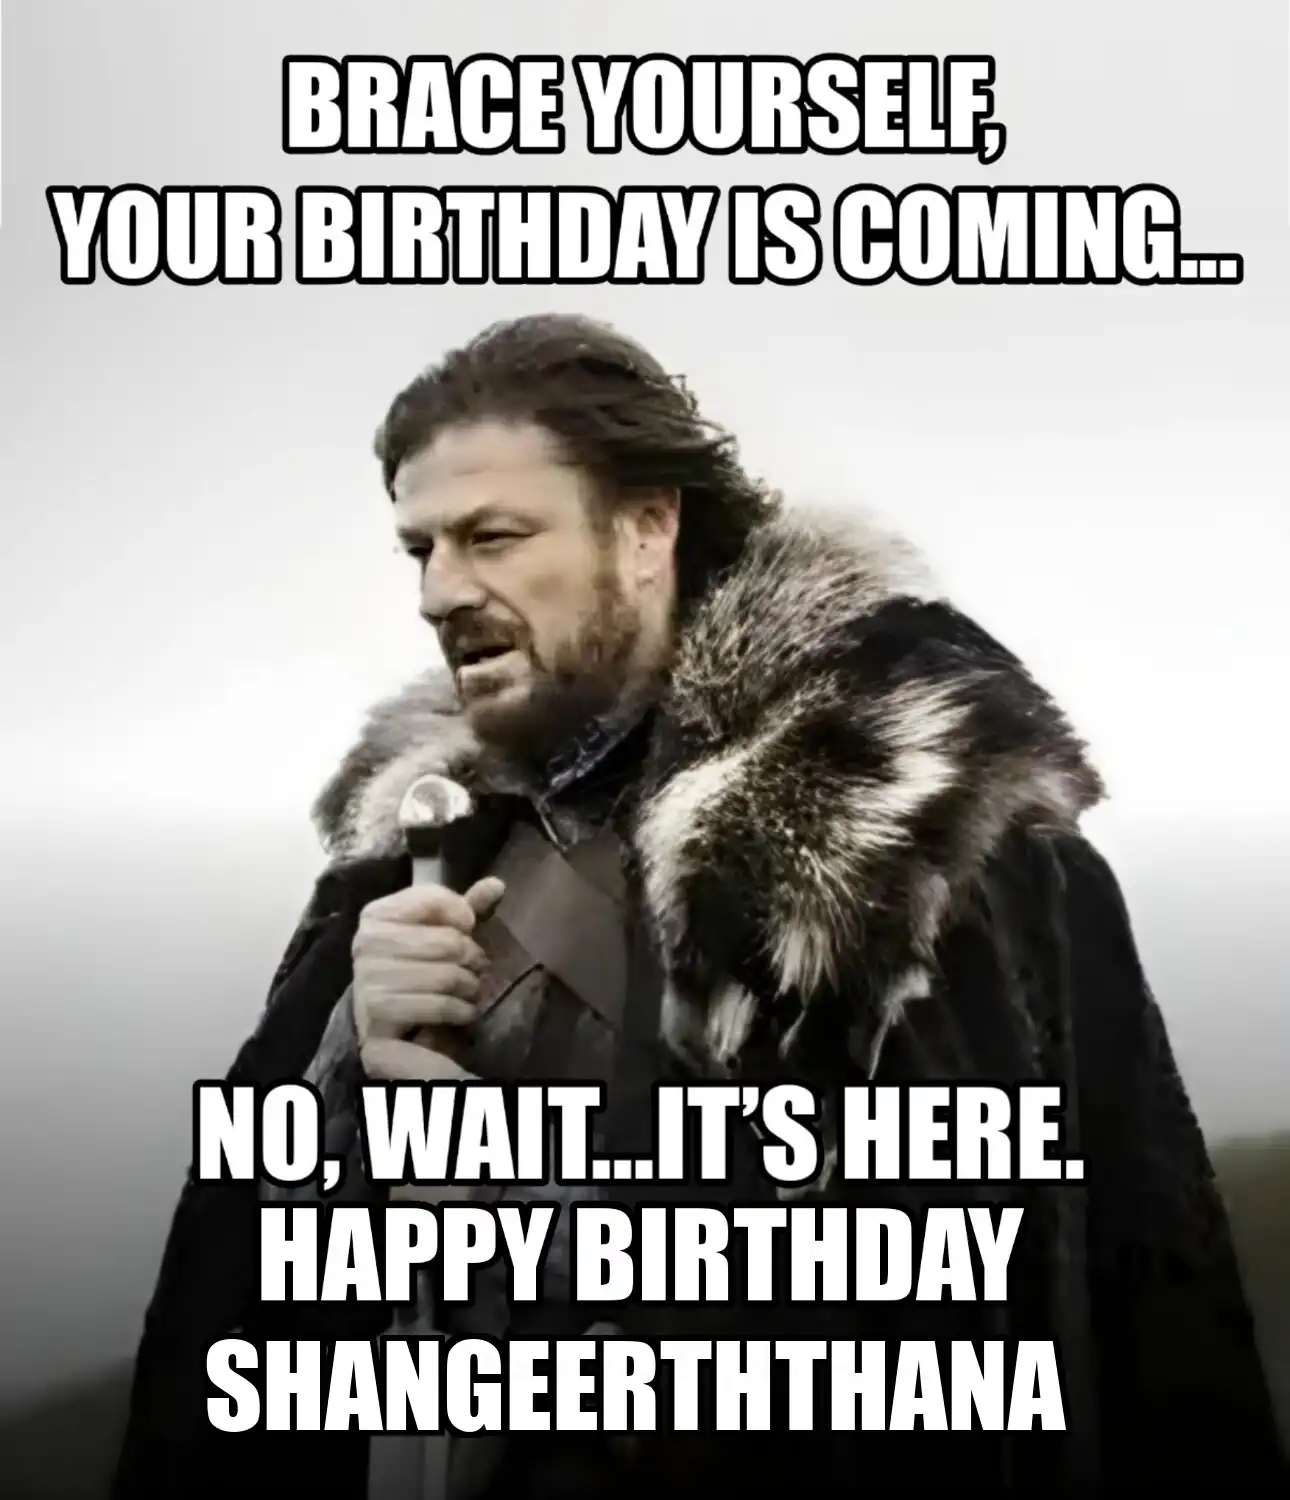 Happy Birthday Shangeerththana Brace Yourself Your Birthday Is Coming Meme